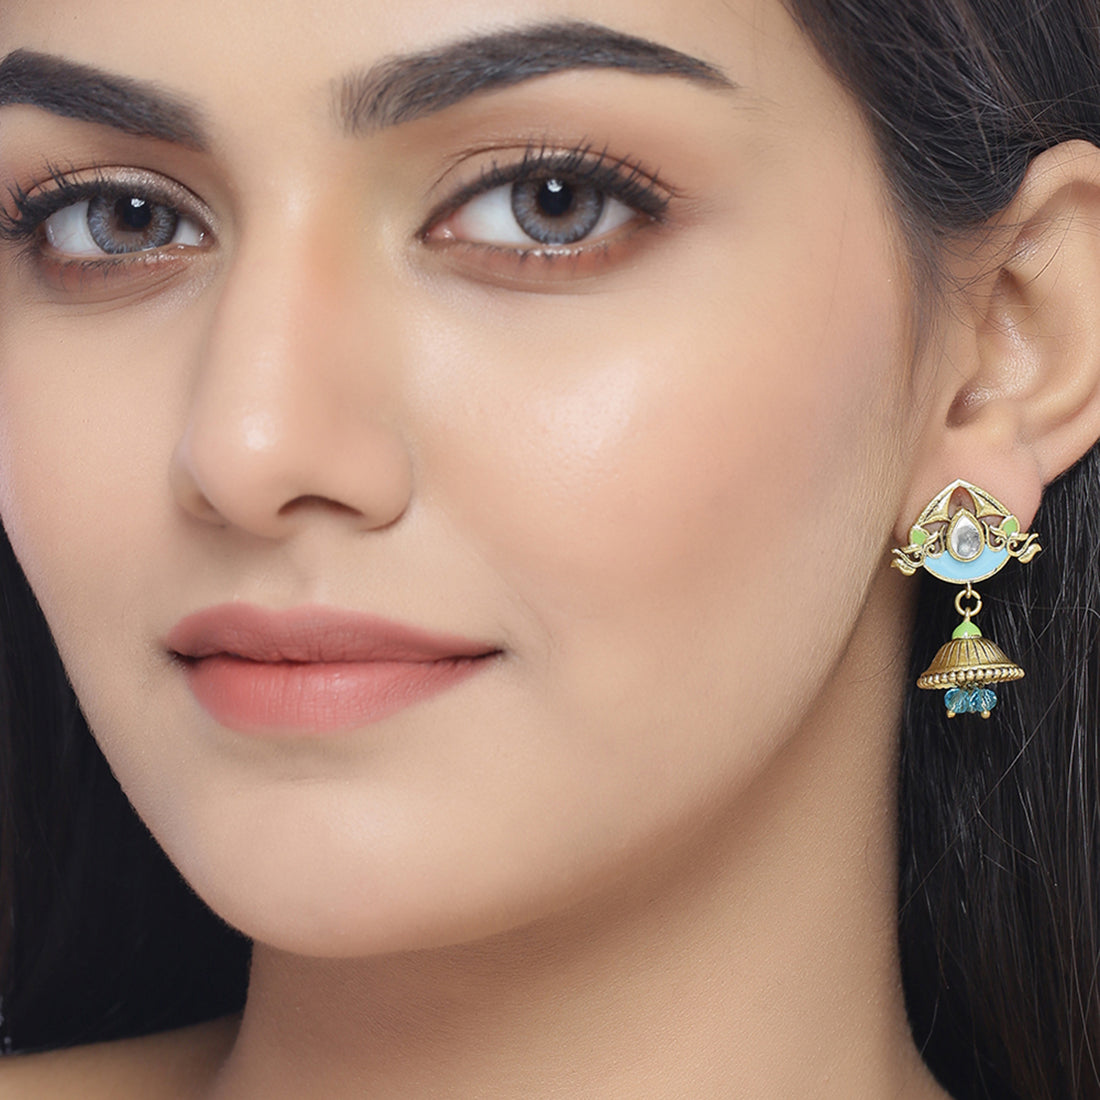 Gwalior Lightly Embellished Jhumka Earrings